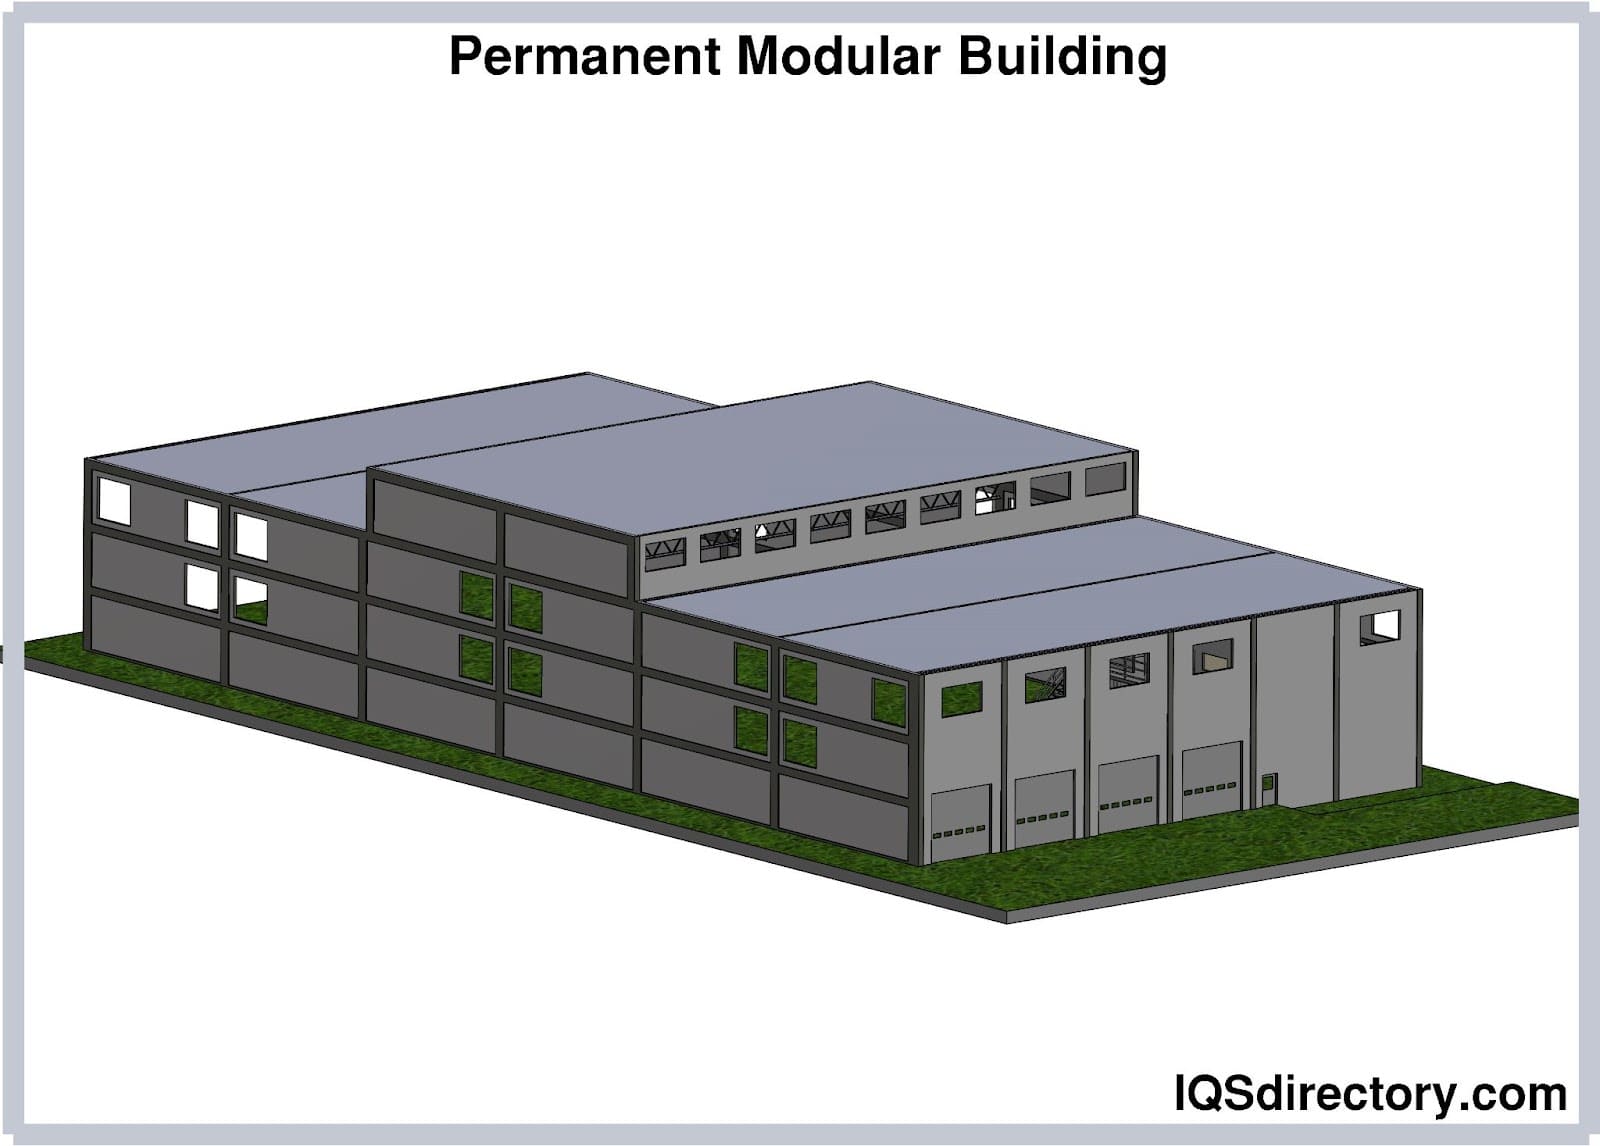 Permanent Modular Building